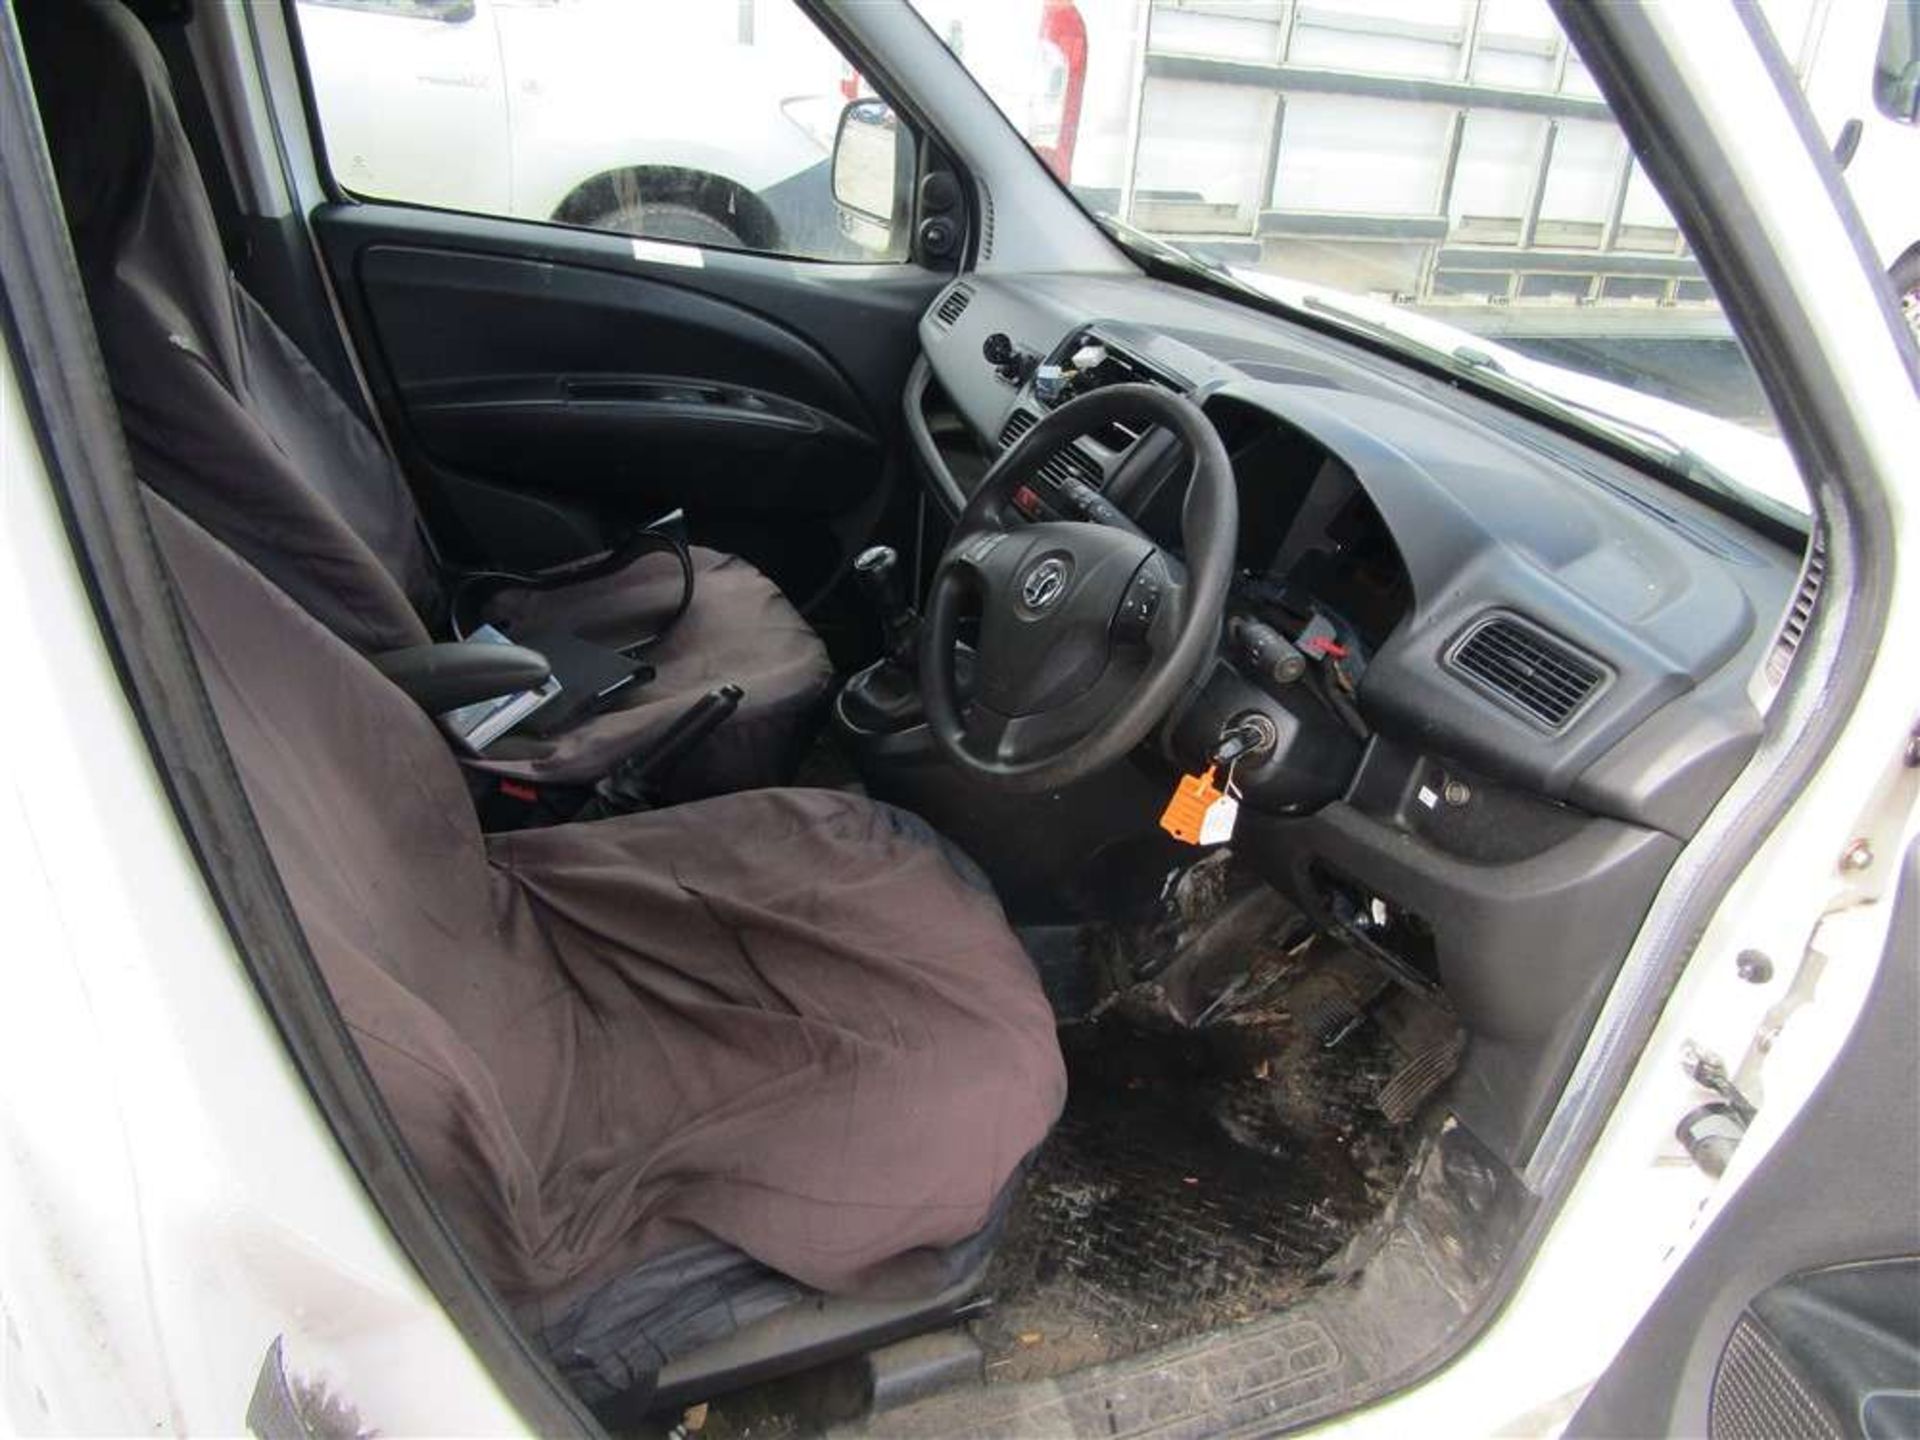 2014 63 reg Vauxhall Combo 2300 L1H1 CDTI (Runs but no dash, clocks, etc) (Direct UU Water) - Image 6 of 6